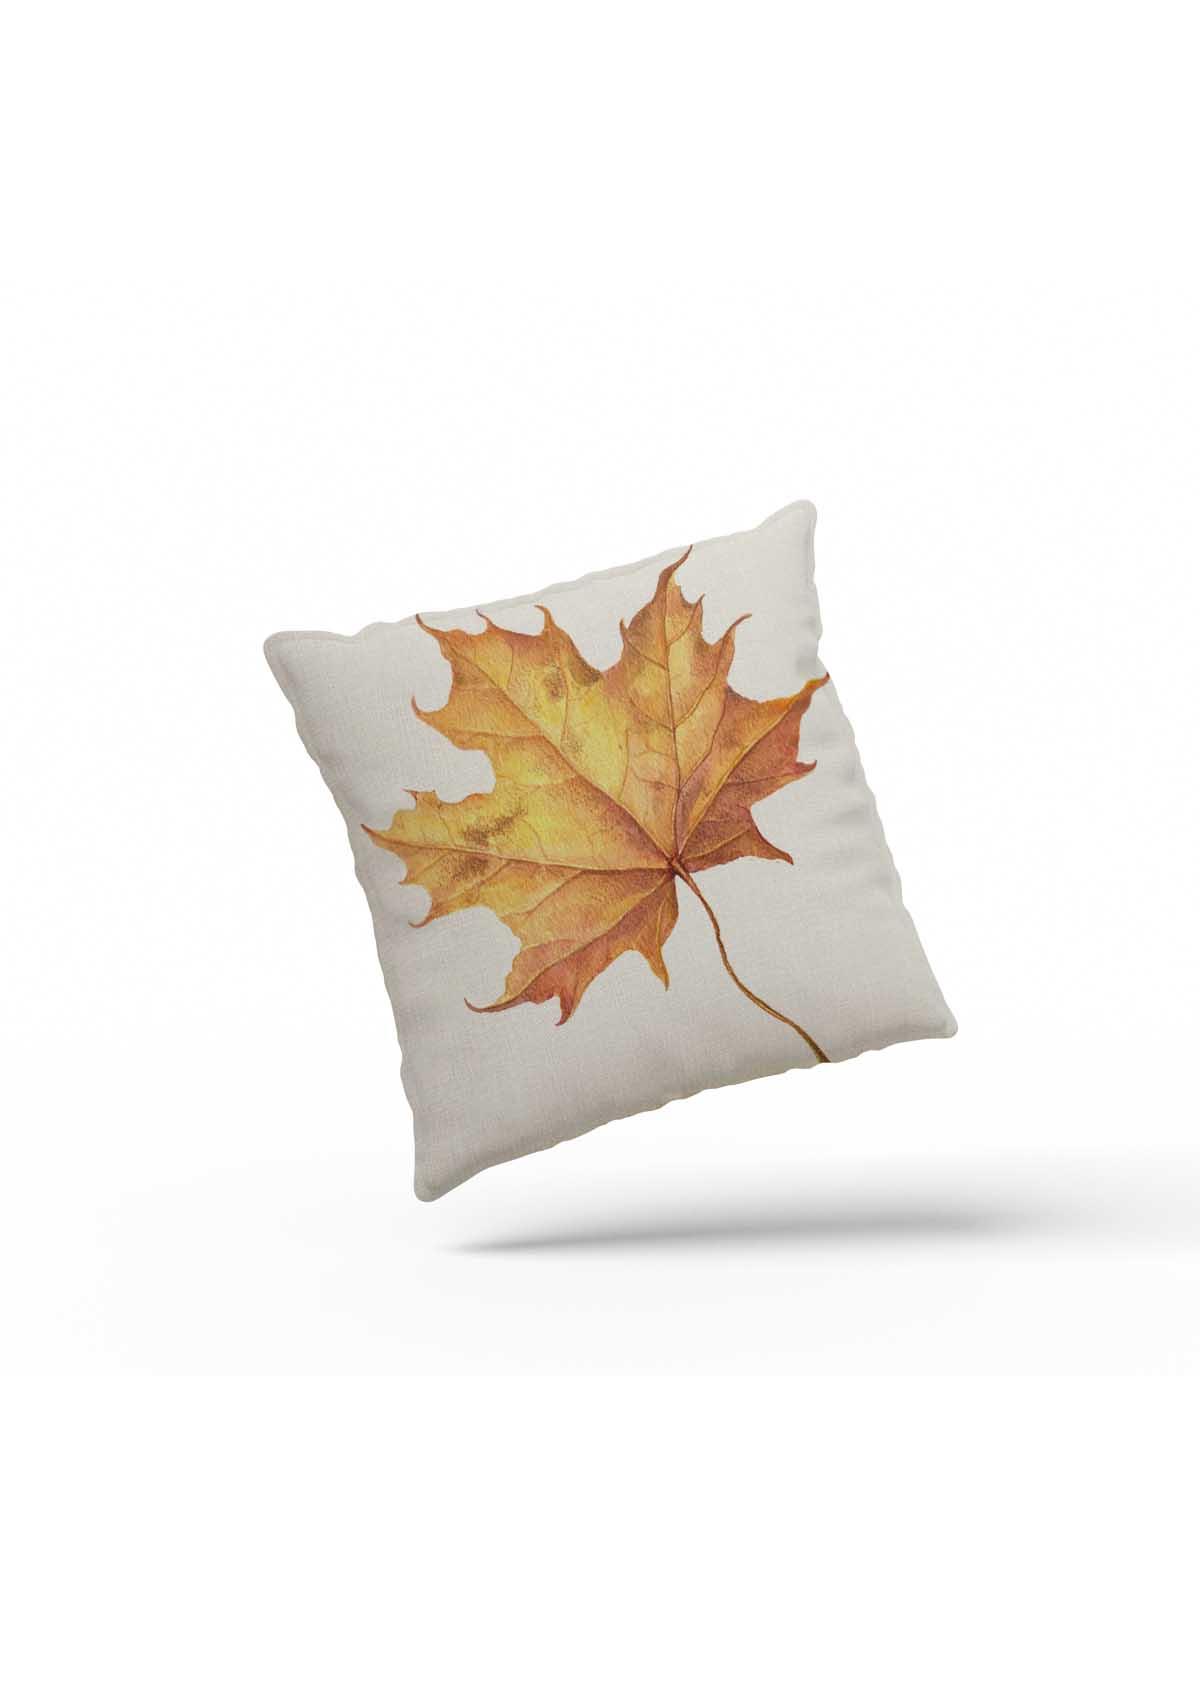 Autumn Leaves "Fall's Beauty" Cushion Covers